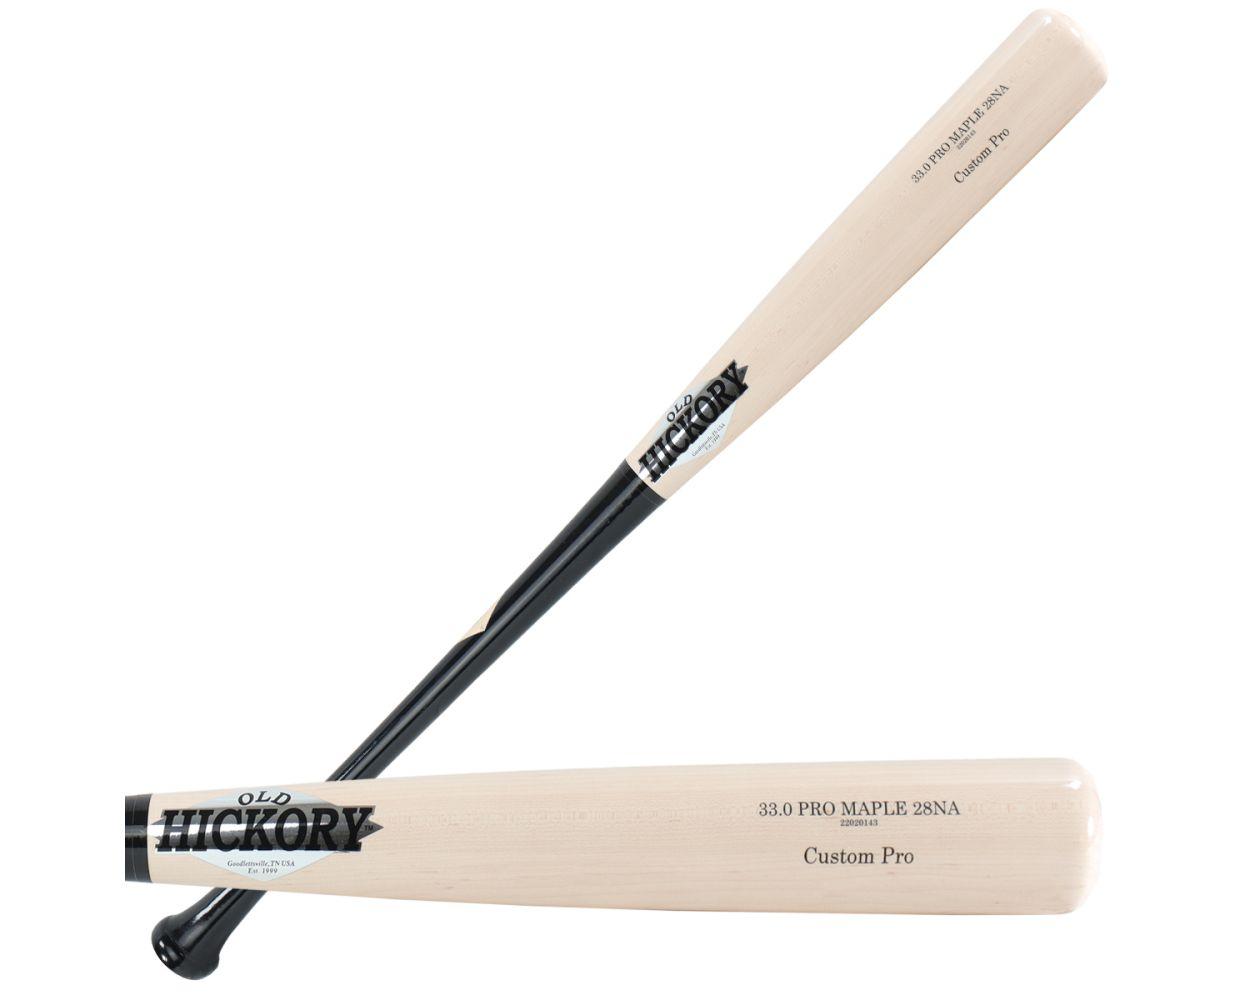 Old Hickory Nolan Arenado Wood Bat, Better Baseball